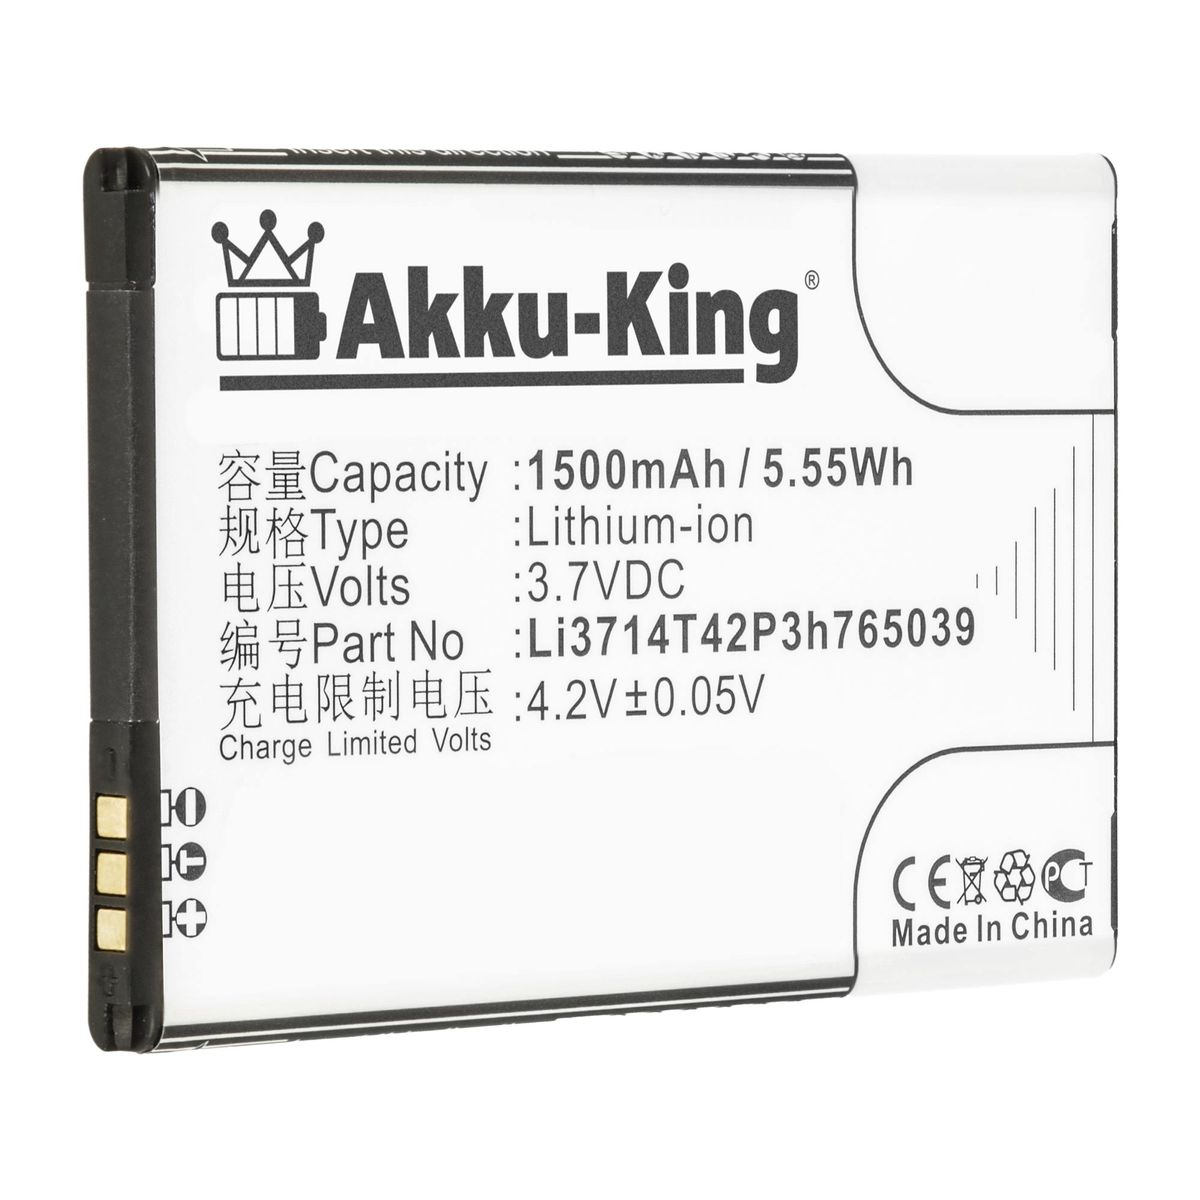 AKKU-KING Akku kompatibel mit Volt, 1500mAh Li-Ion Handy-Akku, ZTE Li3714T42P3h765039 3.7